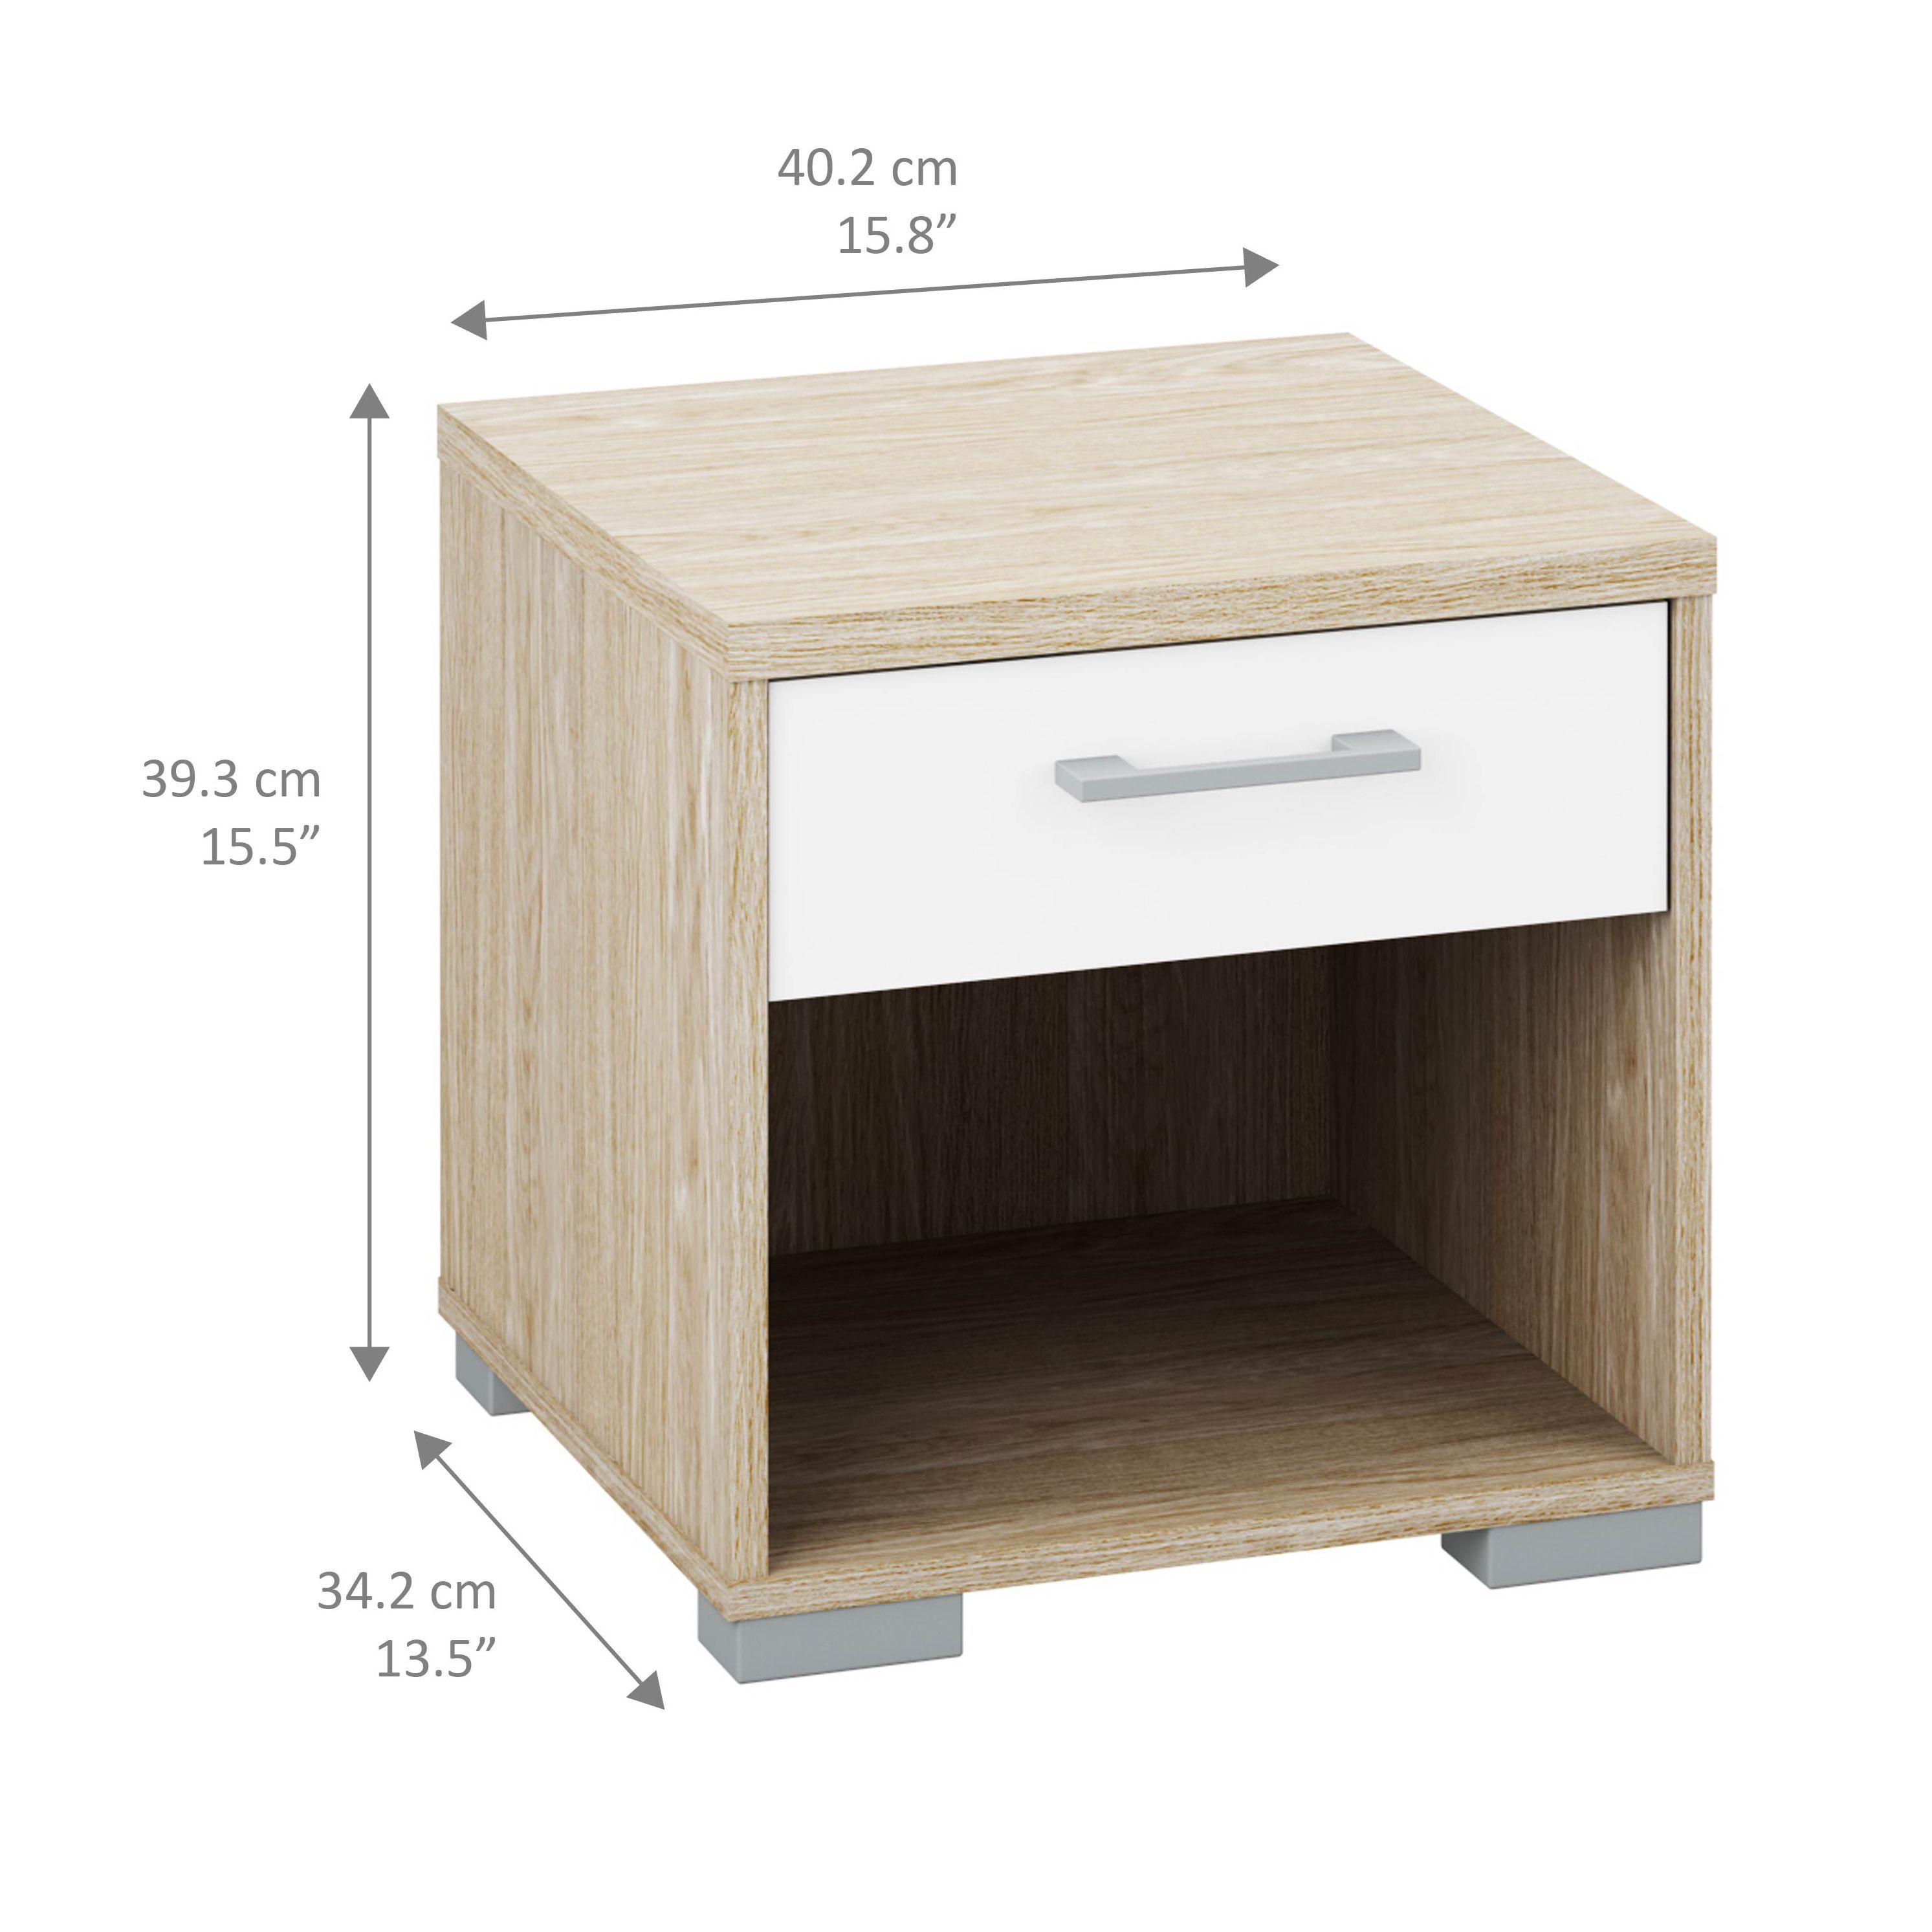 Evie White oak effect 1 Drawer Bedside chest (H)393mm (W)402mm (D)342mm